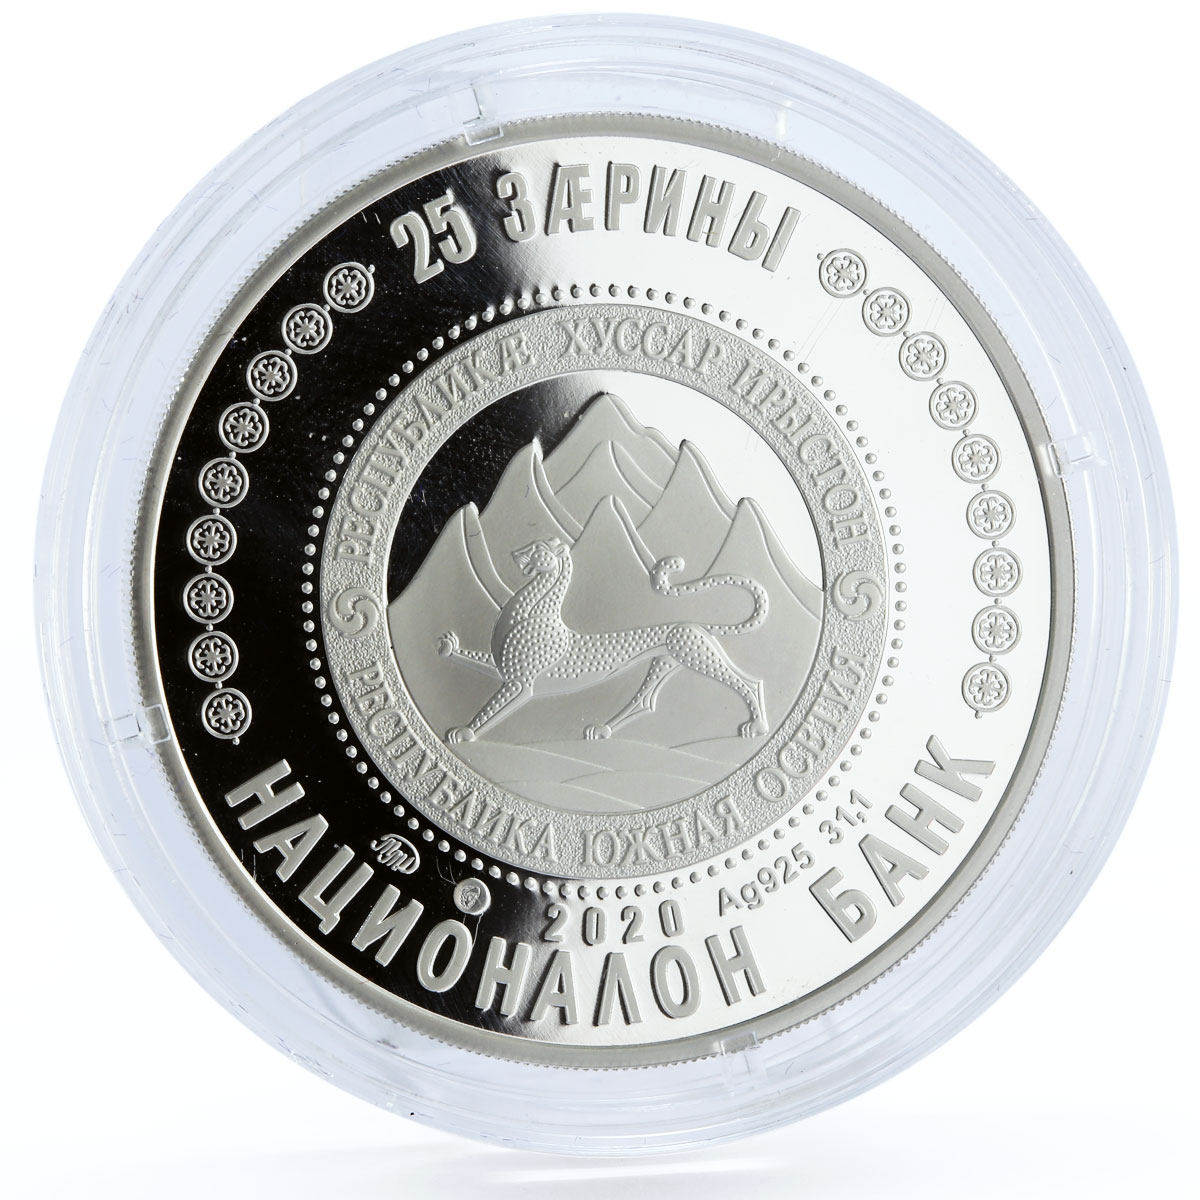 South Ossetia 25 zarin National Poet Seca Gadiayty Gadiev silver coin 2020